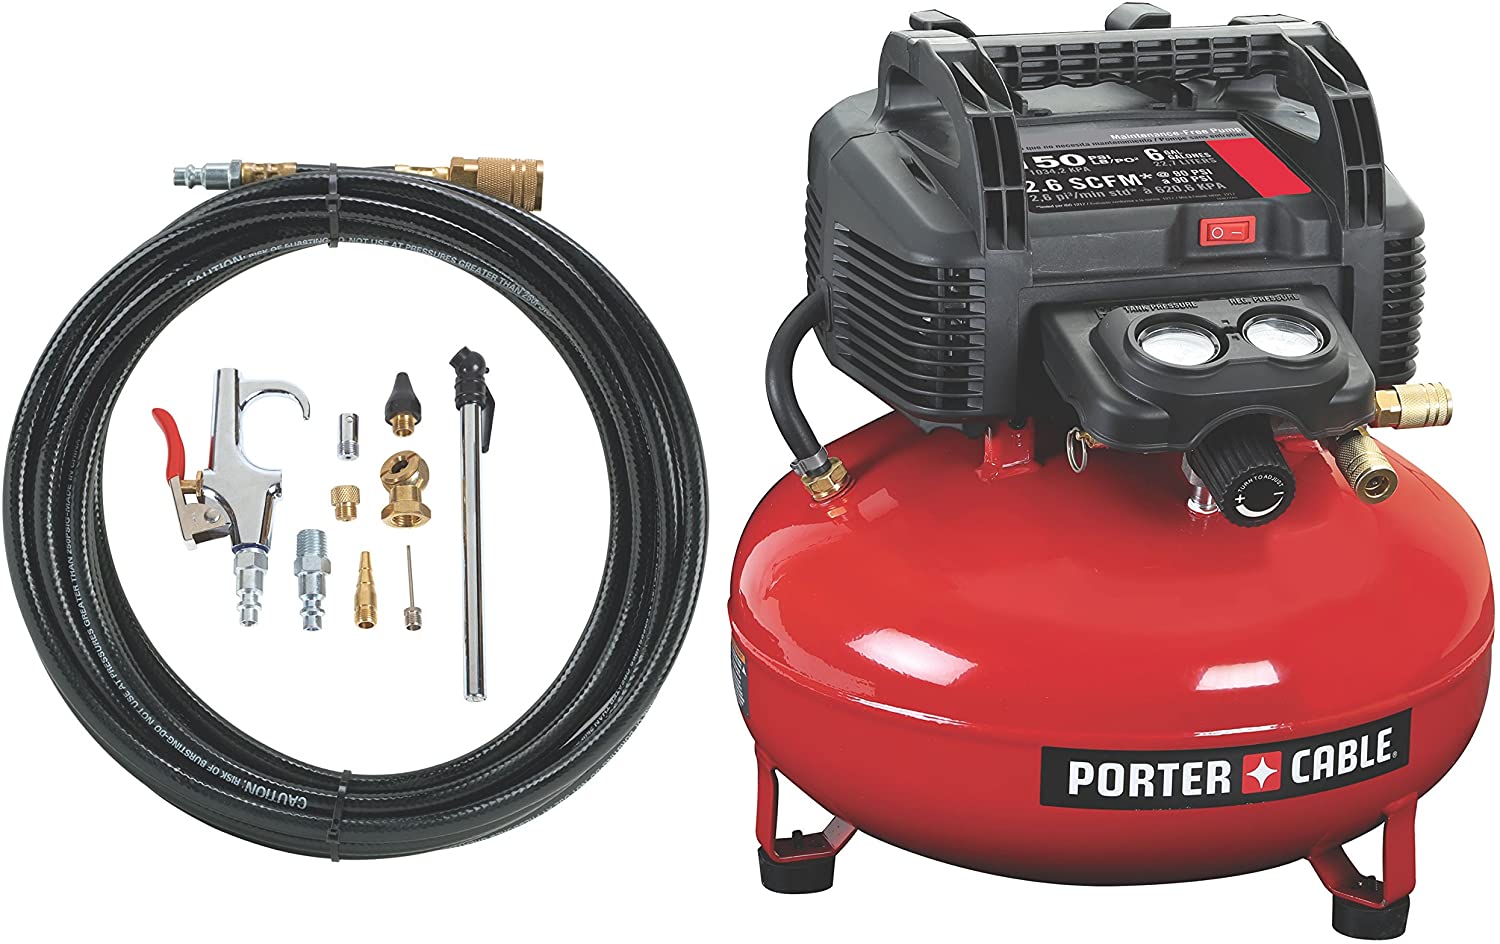 Porter-Cable C2002-Wk Oil-Free UMC Pancake Compressor Review